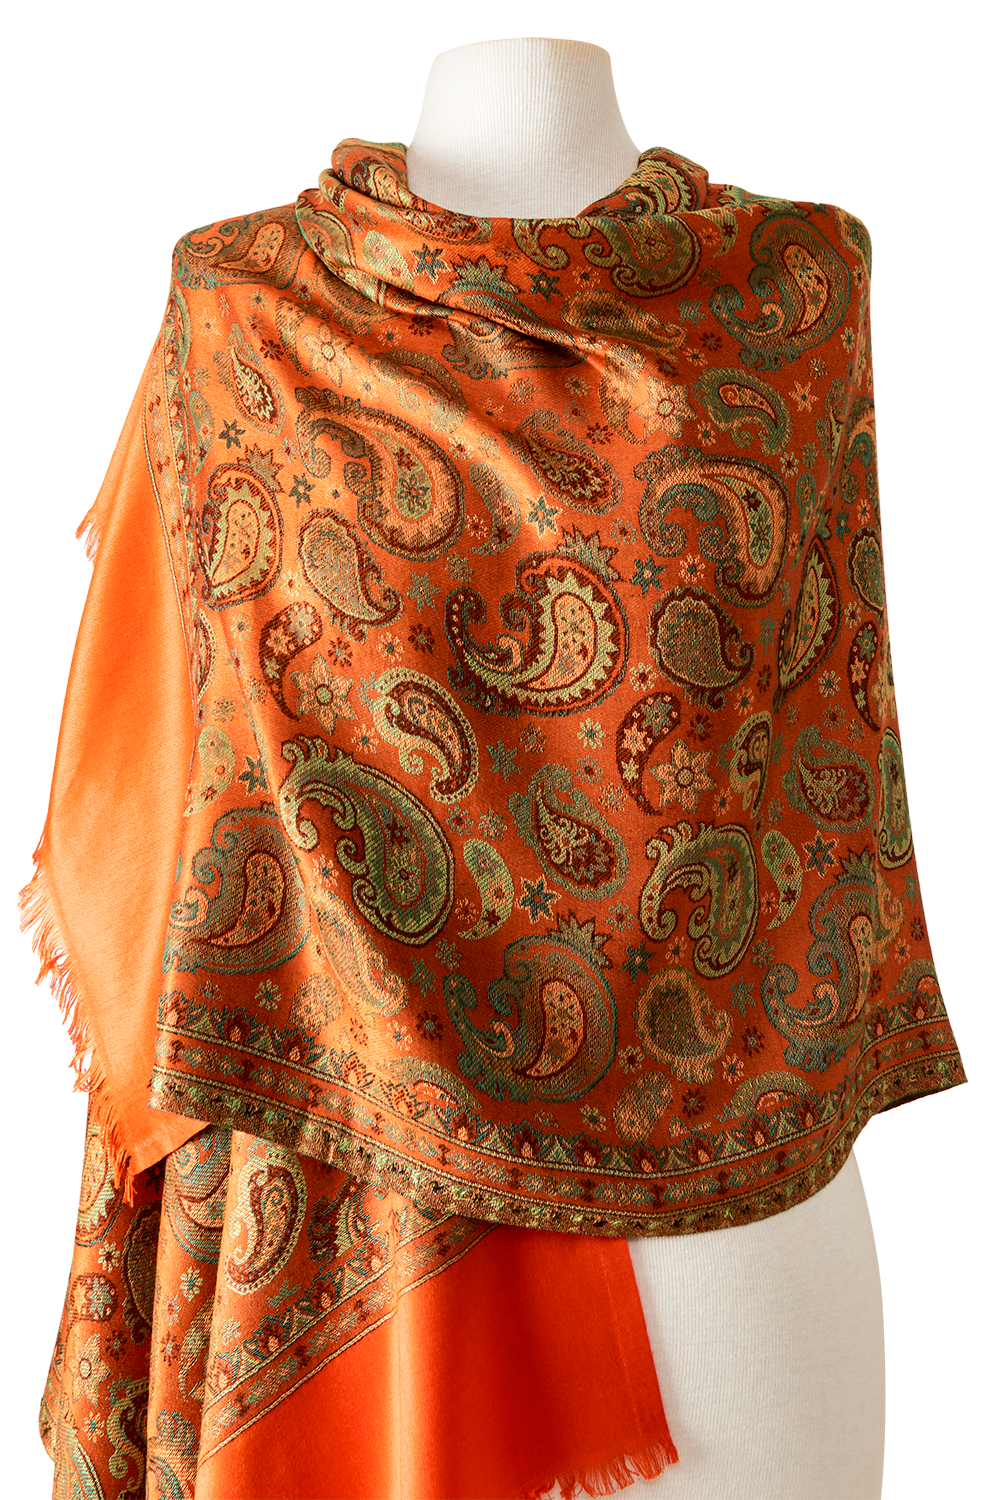 Pashmina Modal arabesque with Indian silk | 70x200cm 